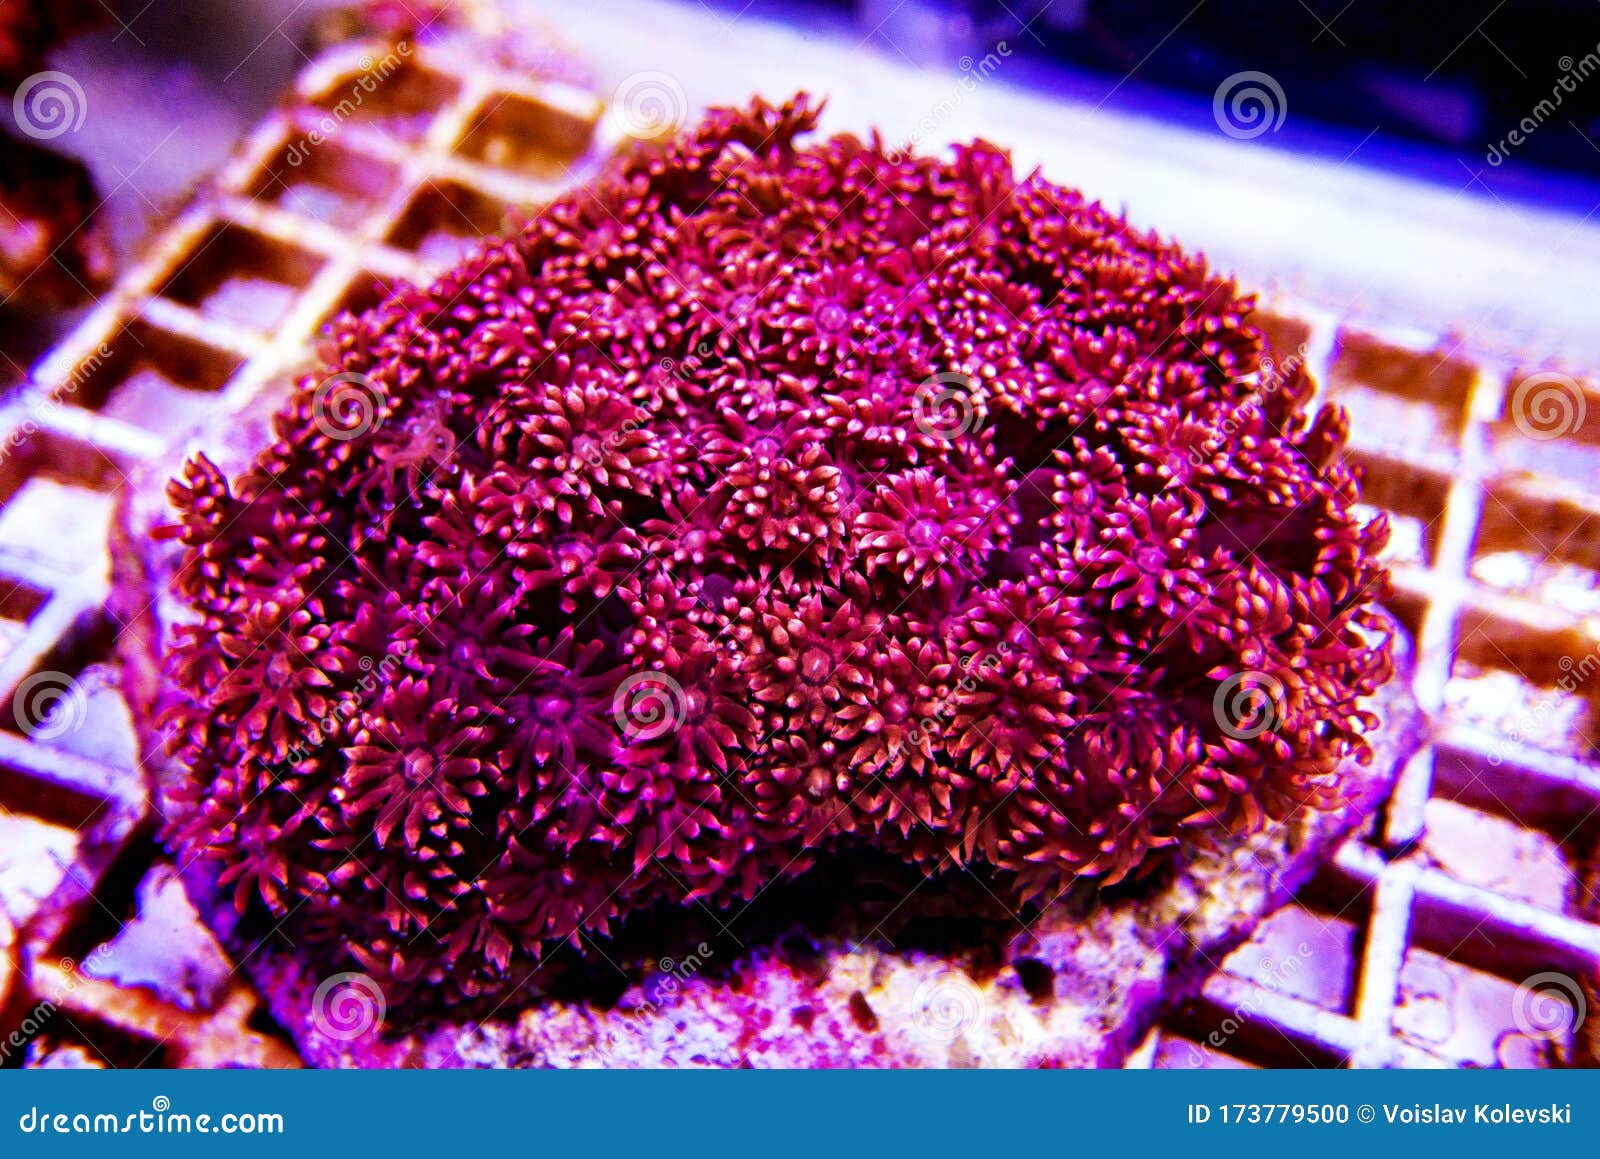 pink flower pot goniopora sp. lps coral